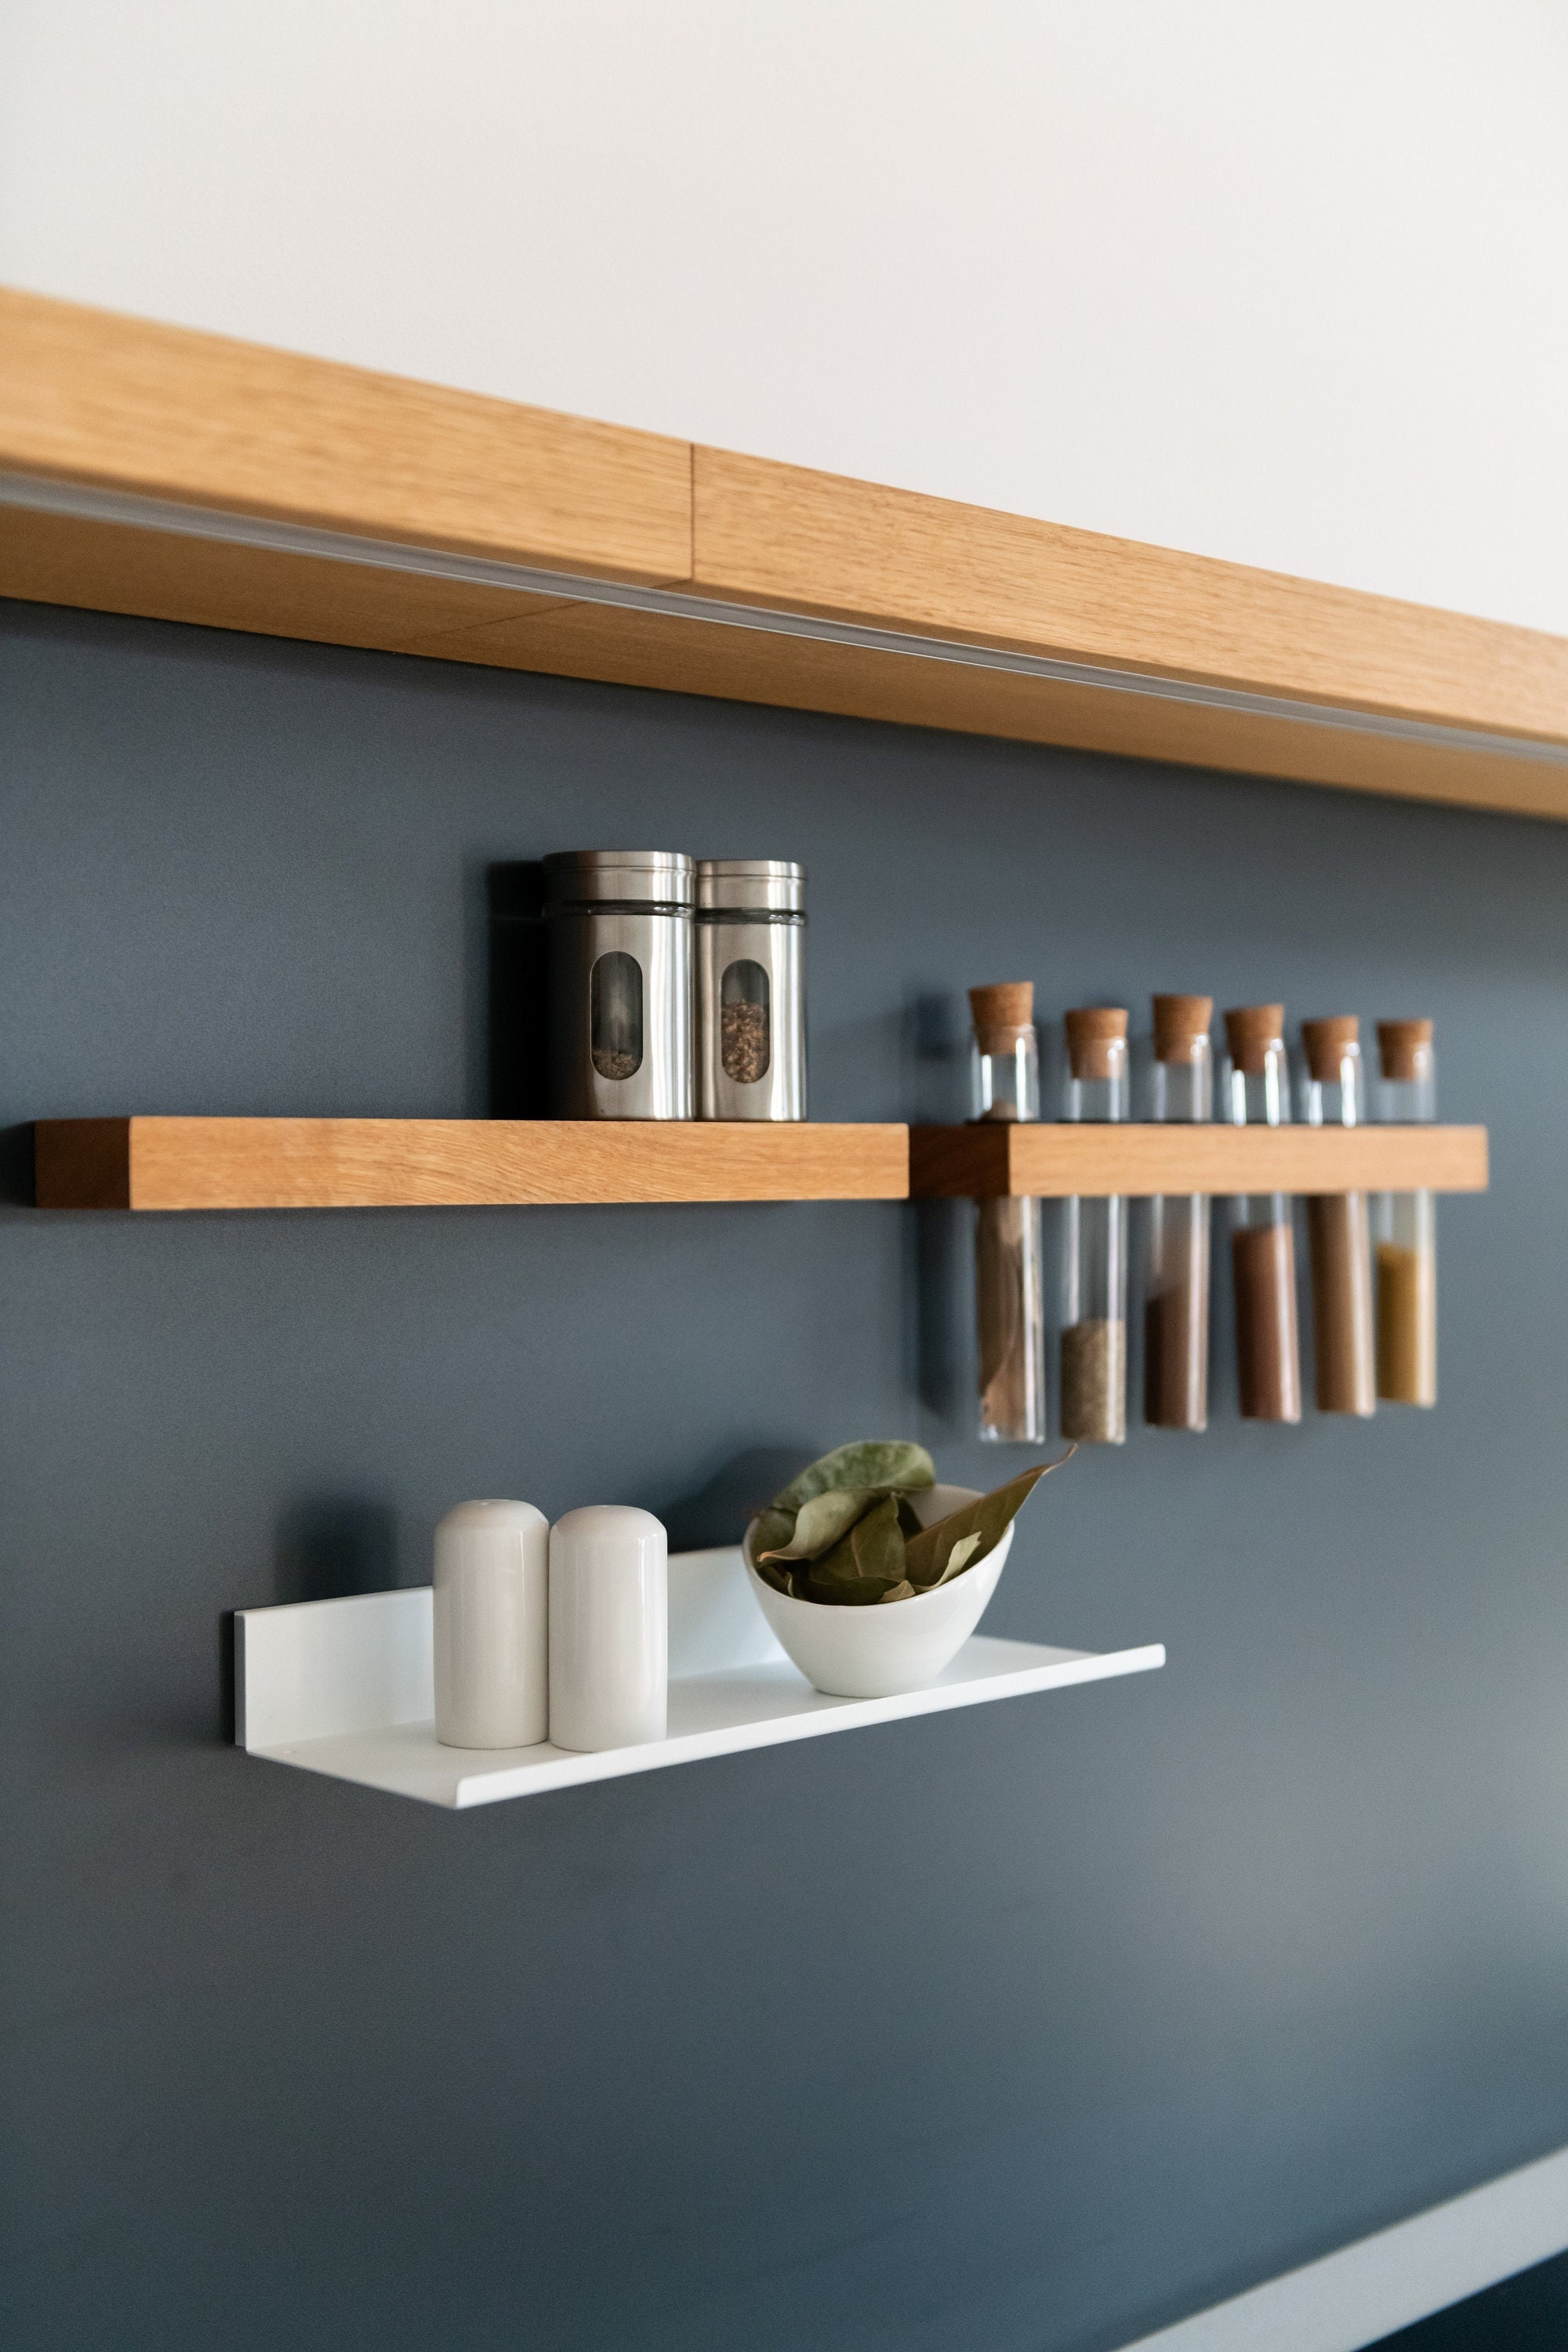 Adhesive Floating Shelves Non-Drilling, Set of 3, Display Picture Ledge  Shelf U Bathroom Shelf Organizer for Home/Wall Decor/Kitchen/Bathroom  Storage(S+M+L) 